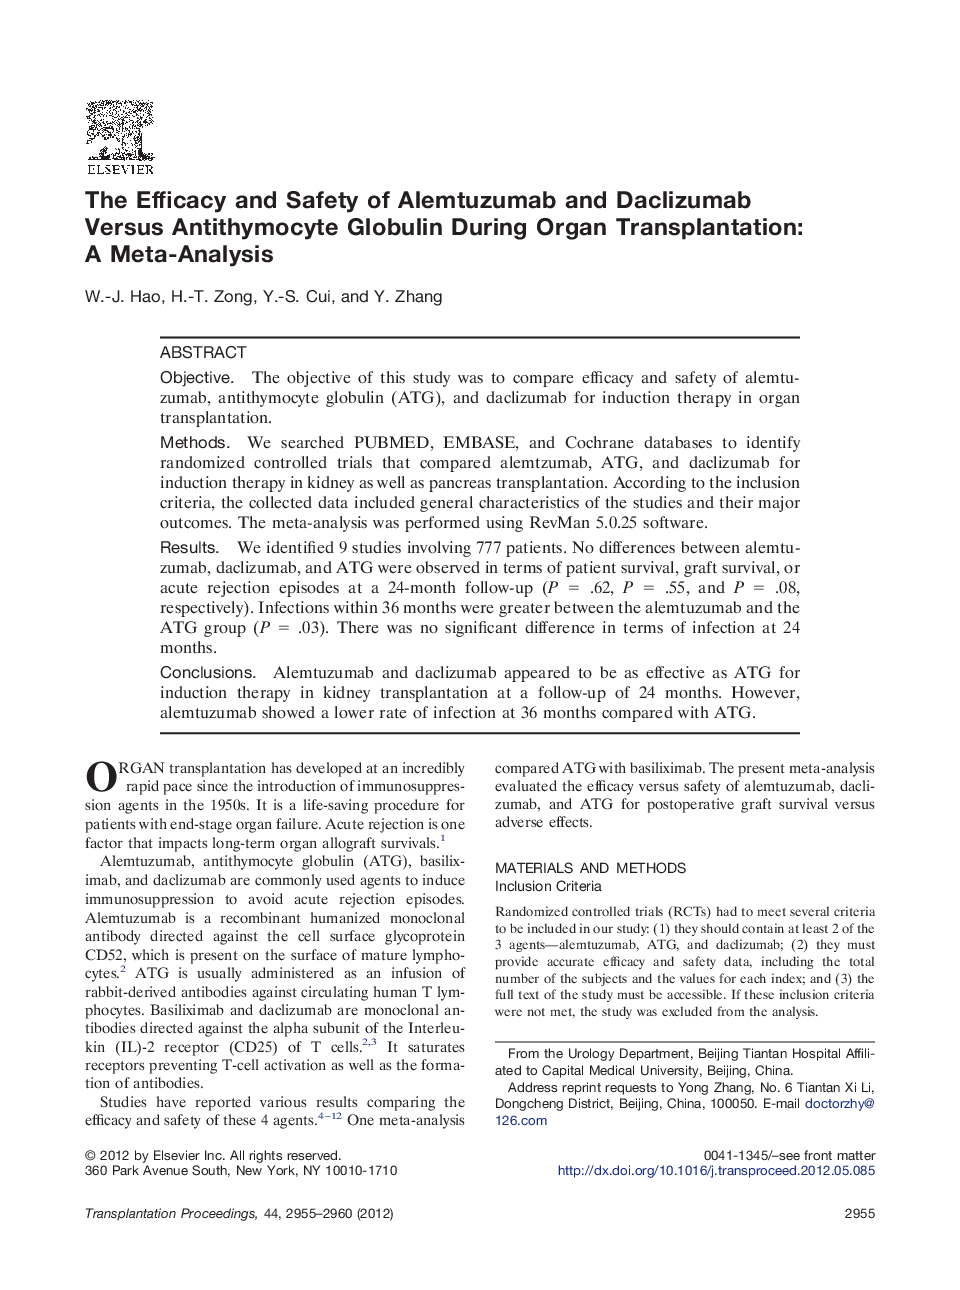 The Efficacy and Safety of Alemtuzumab and Daclizumab Versus Antithymocyte Globulin During Organ Transplantation: A Meta-Analysis